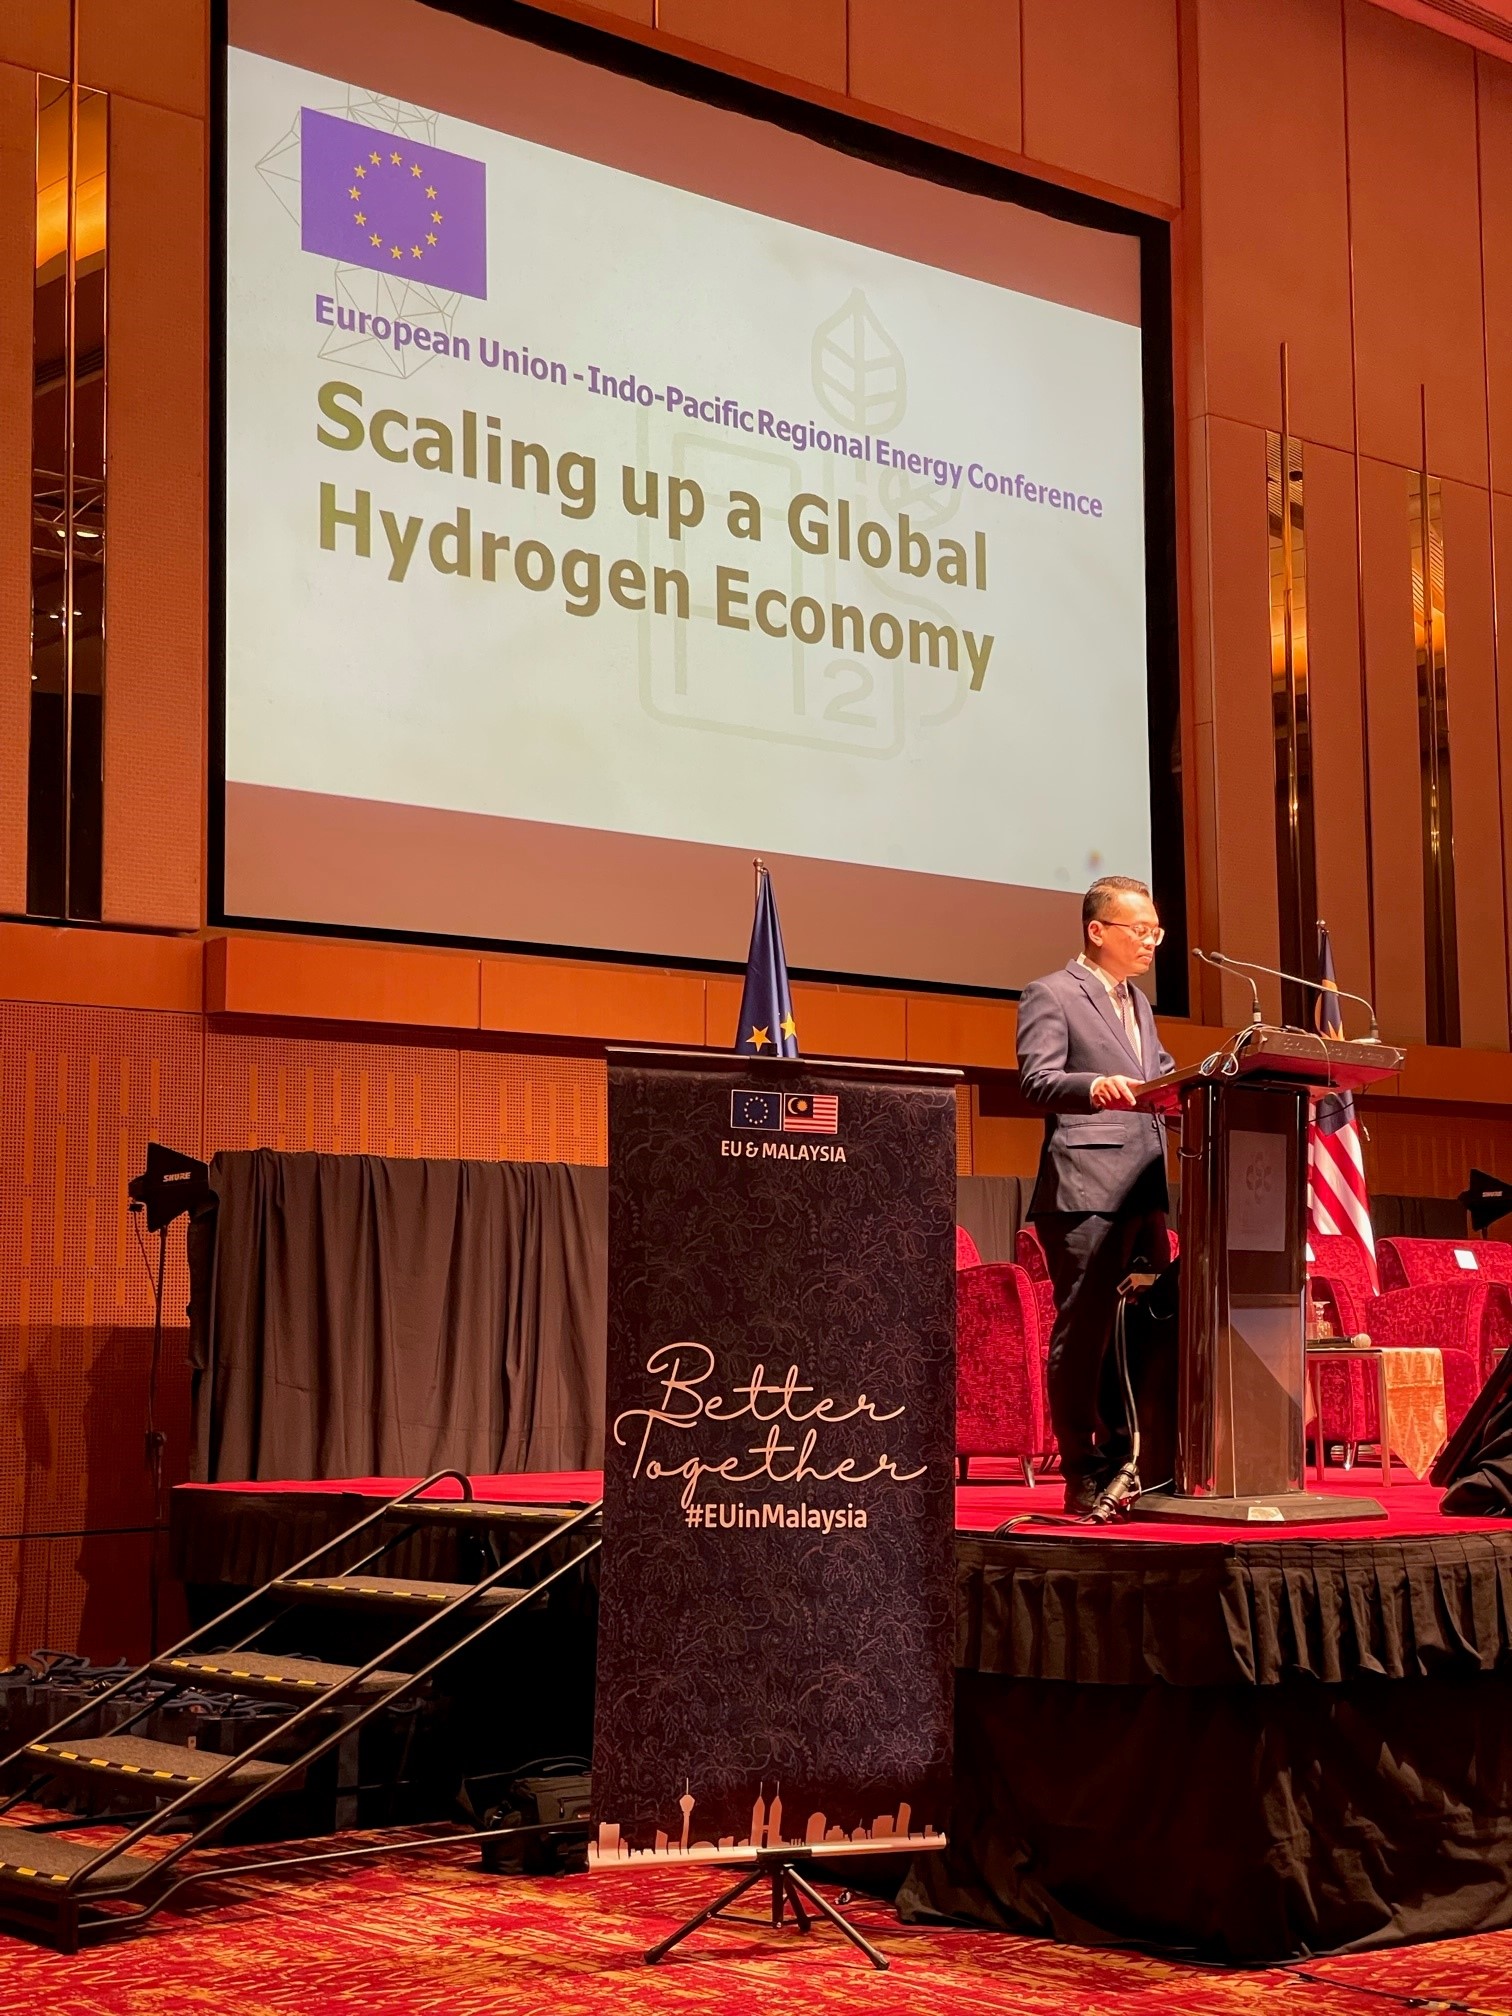 Konference „Scaling up a Global Hydrogen Economy” v Kuala Lumpur